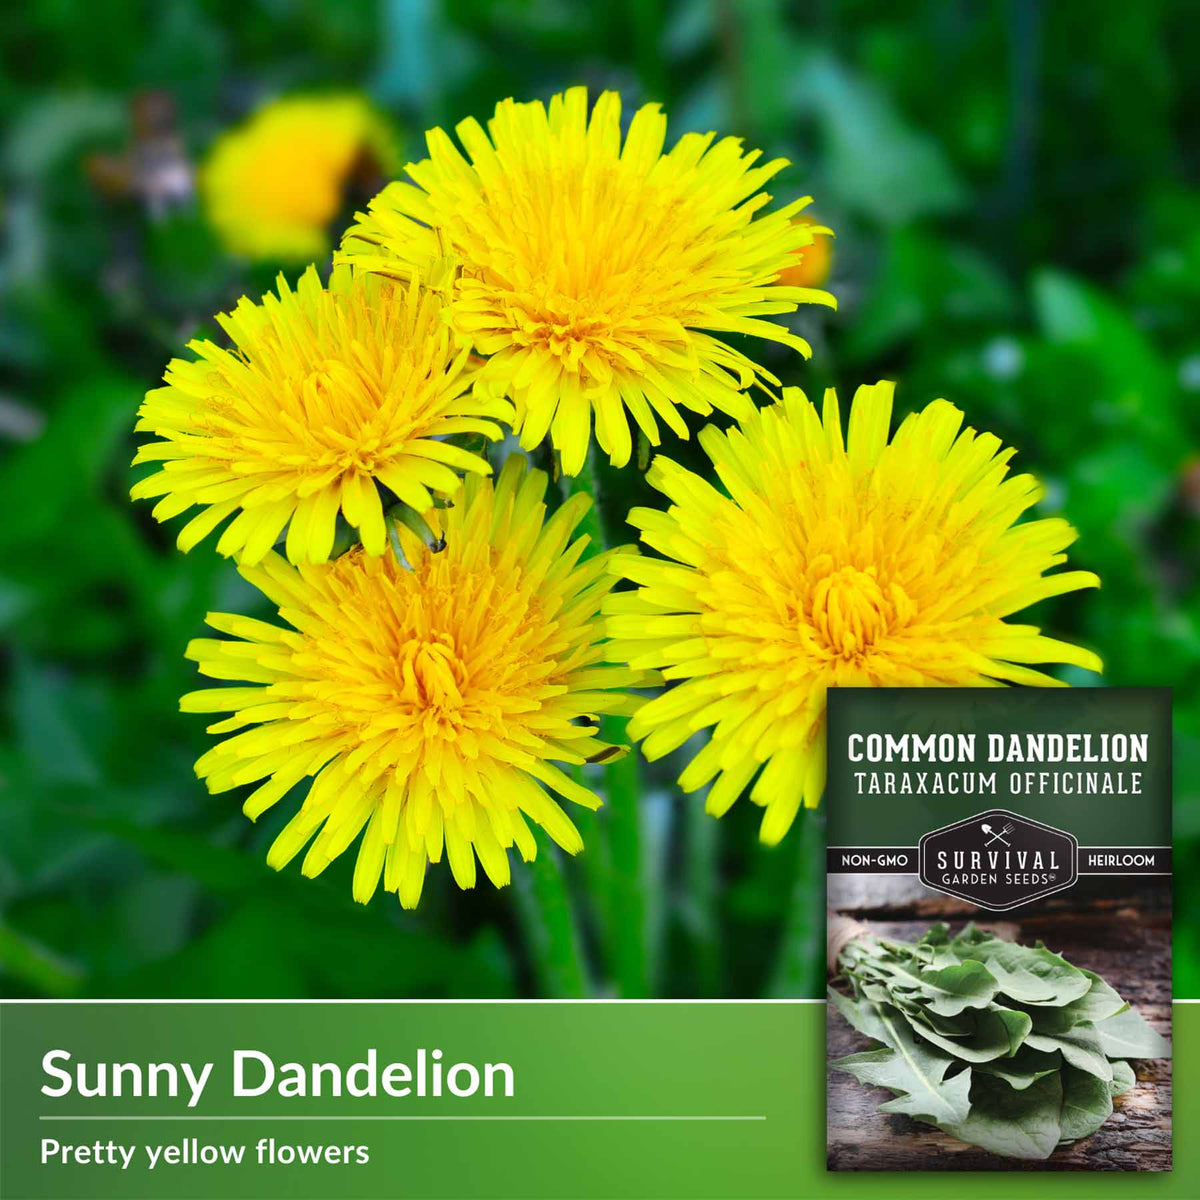 Sunny dandelion - pretty yellow flowers